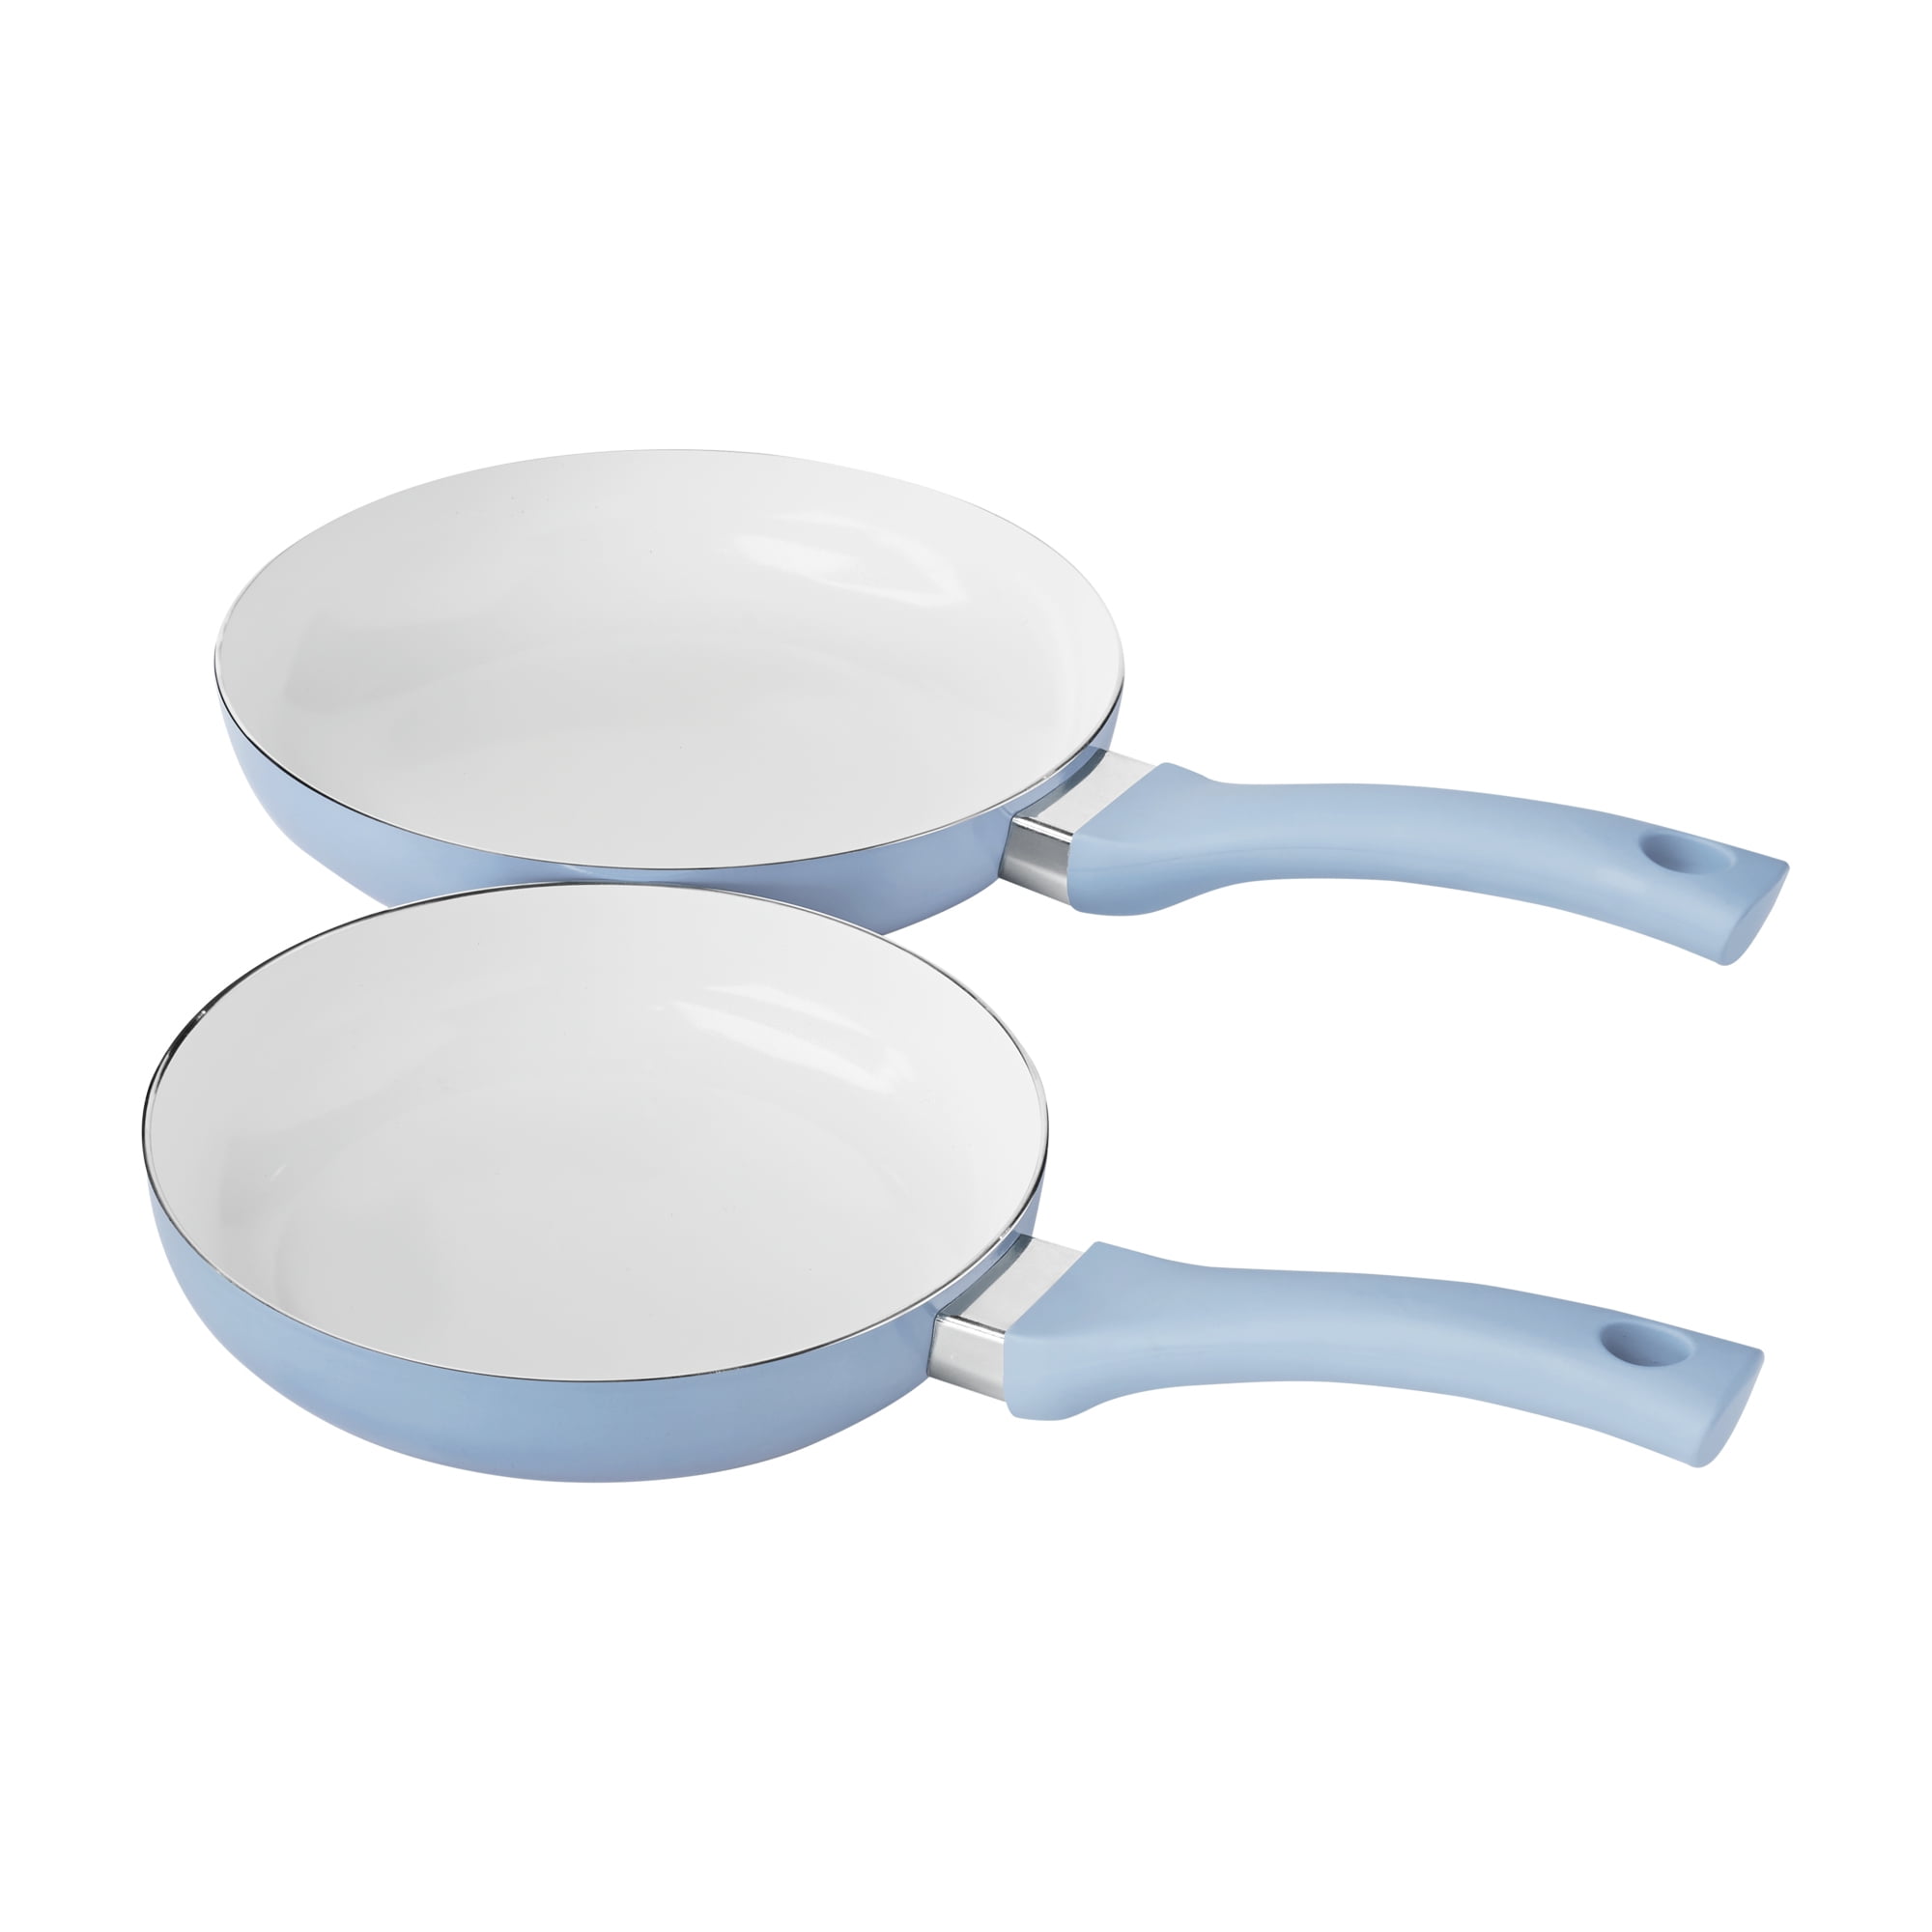 12pc Nonstick Ceramic Coated Aluminum Cookware Set Blue - Figmint™